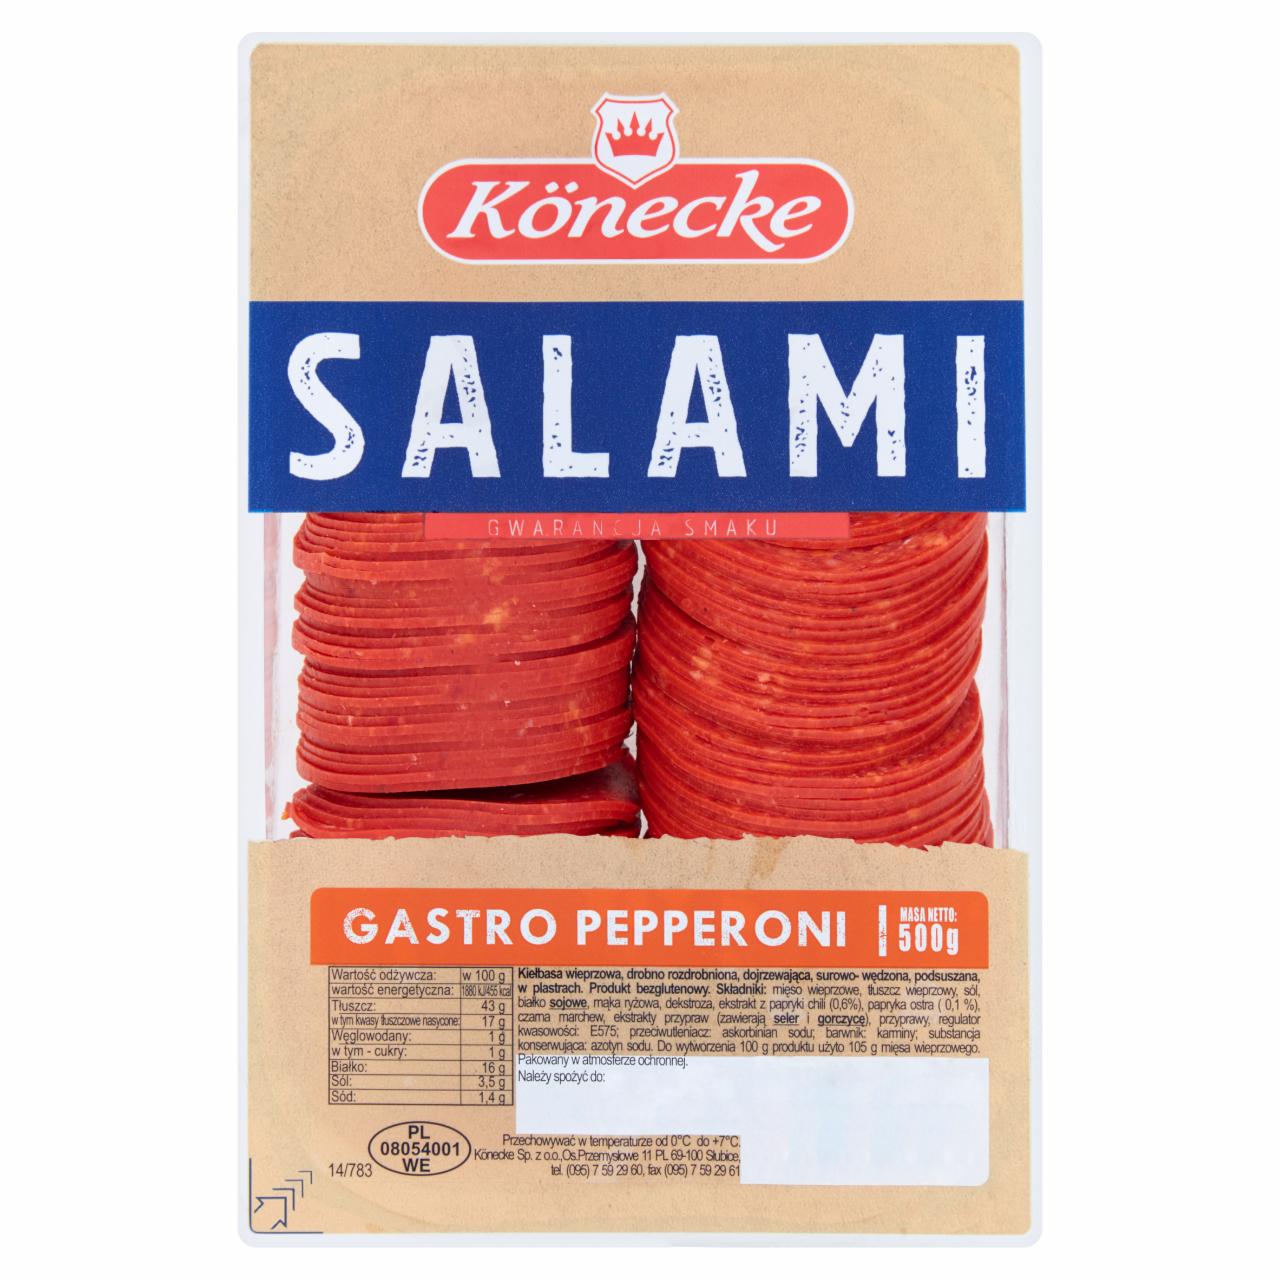 Zdjęcia - Könecke Salami pepperoni gastro 500 g